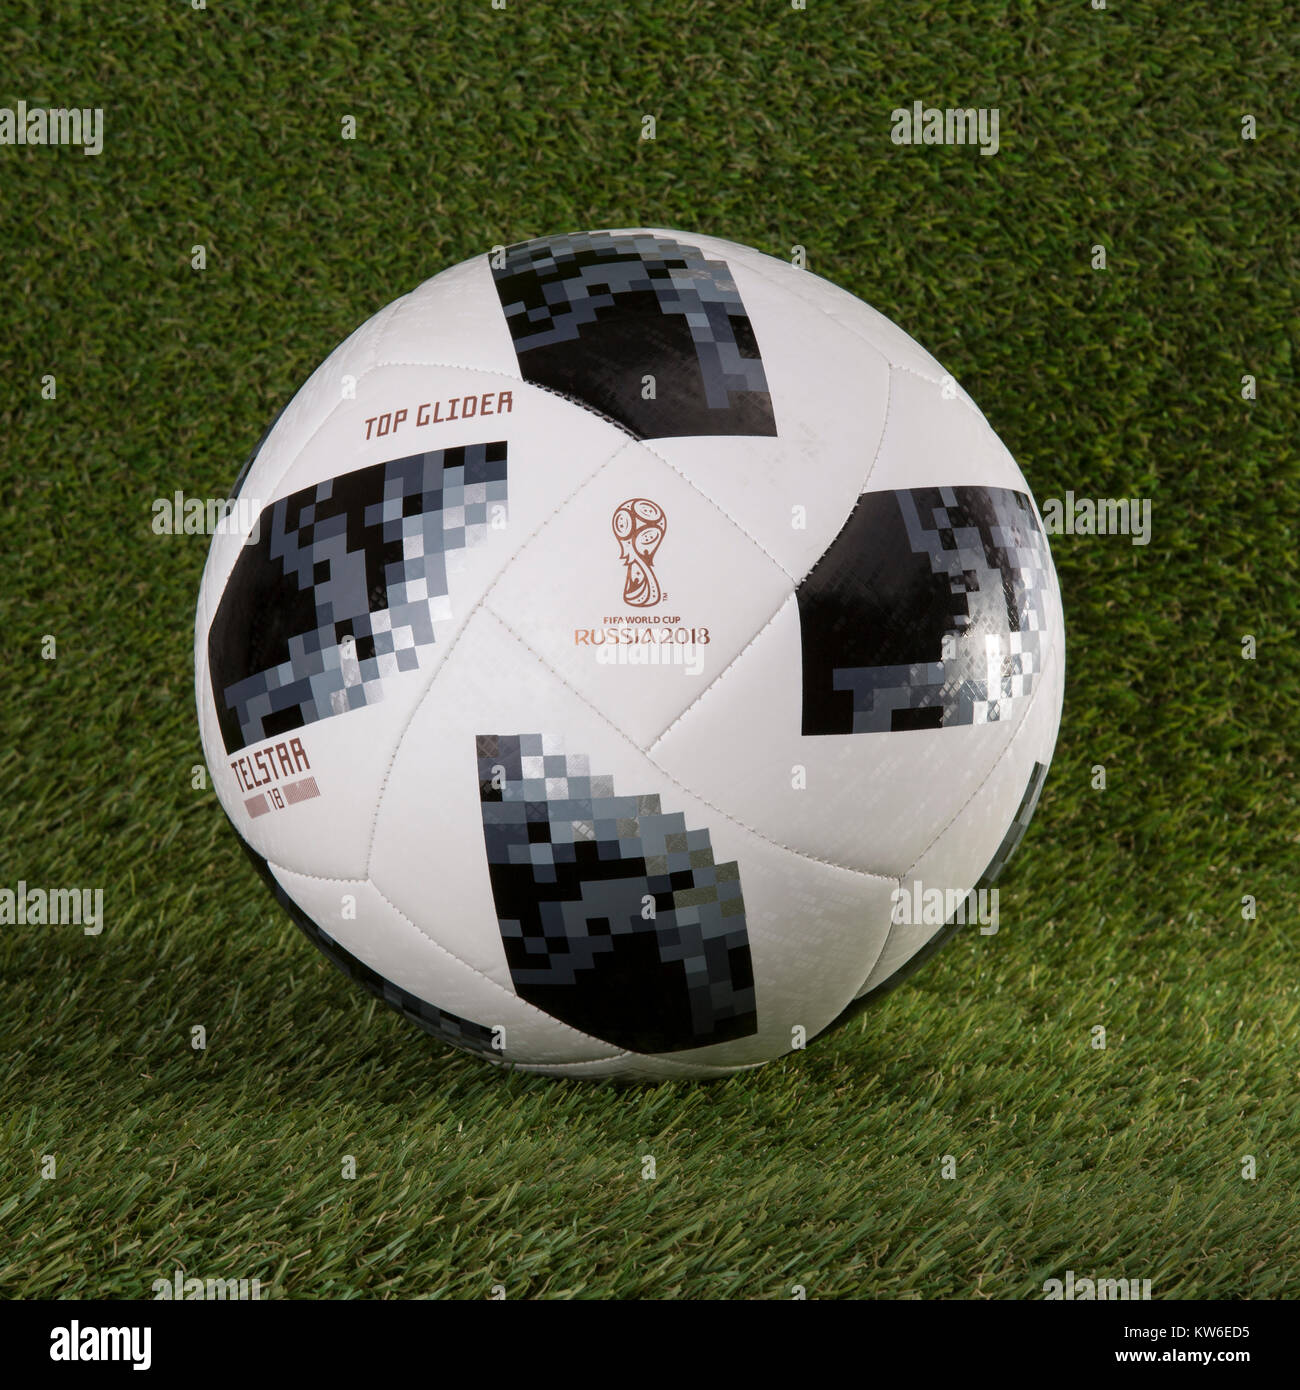 Telstar adidas football hi-res stock photography and images - Alamy